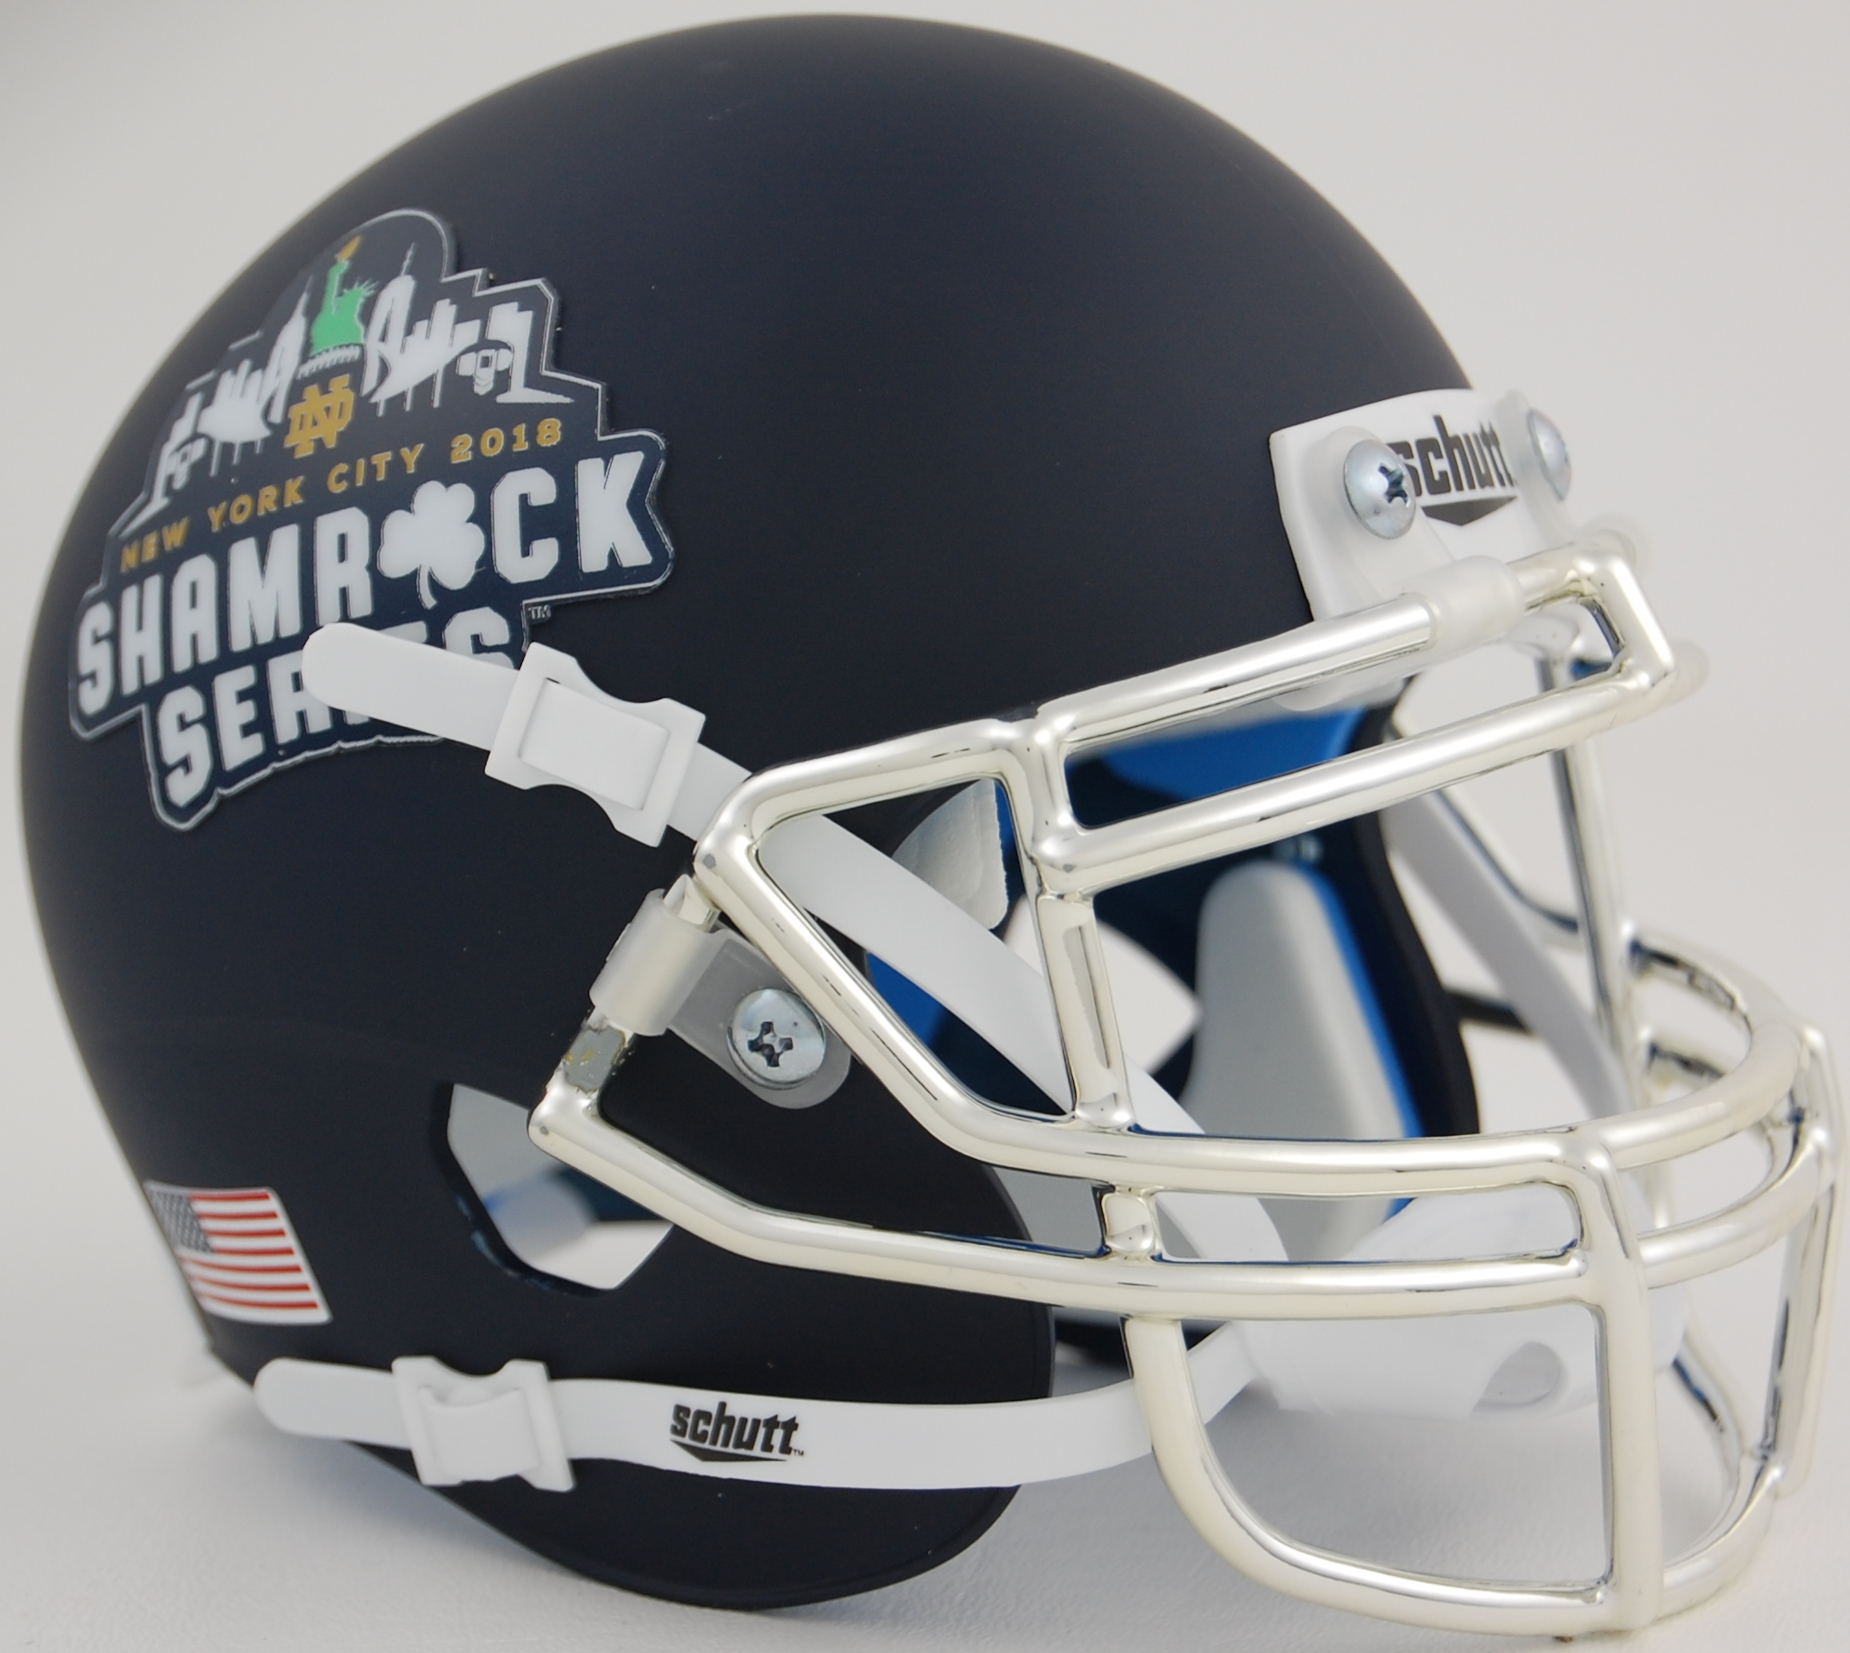 Notre Dame Fighting Irish Authentic College XP Football Helmet Schutt <B>Shamrock Series</B>